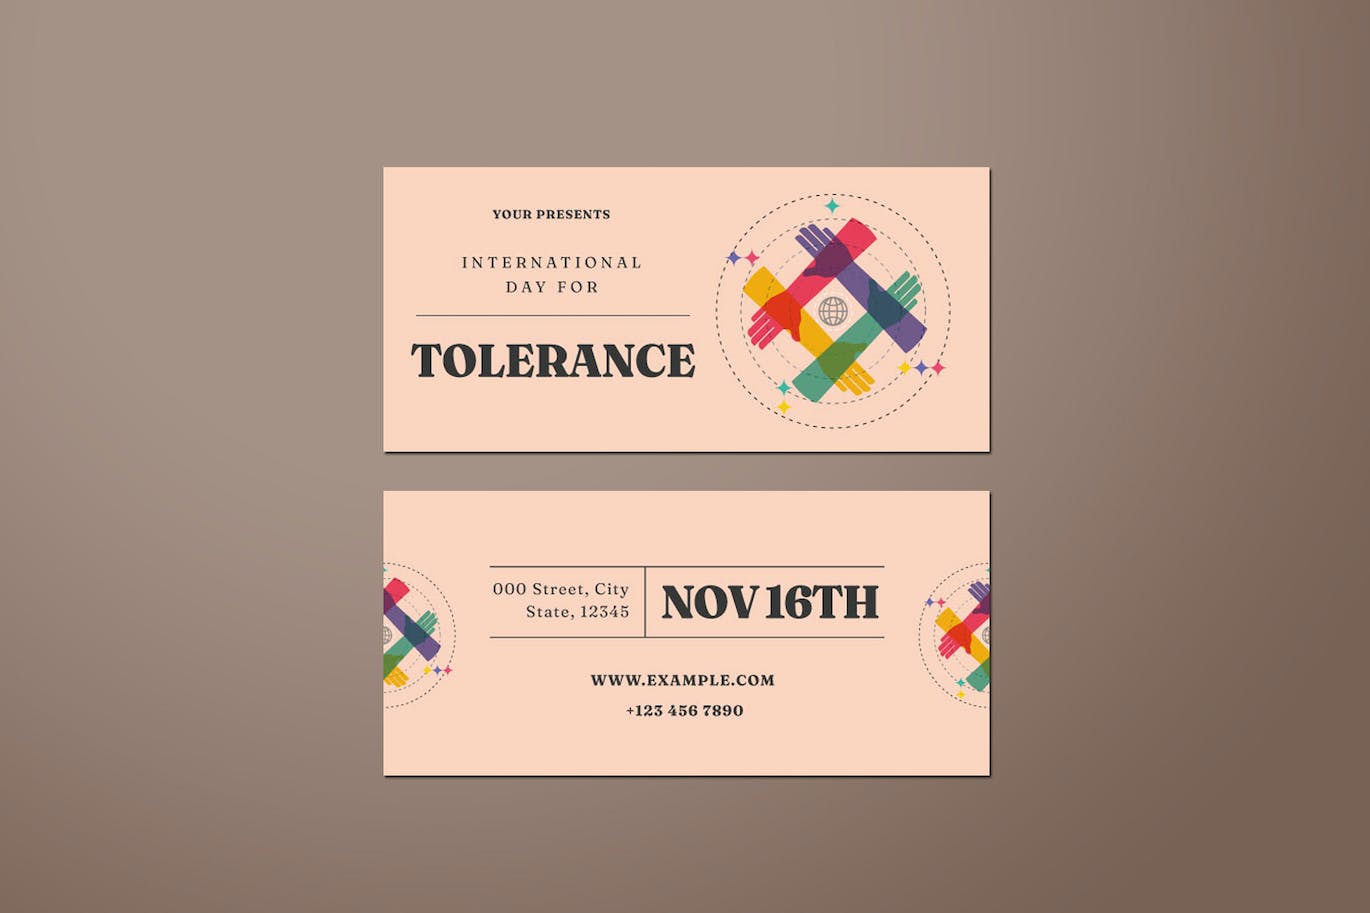 国际宽容日传单设计模板 International Day For Tolerance DL Flyer 设计素材 第3张